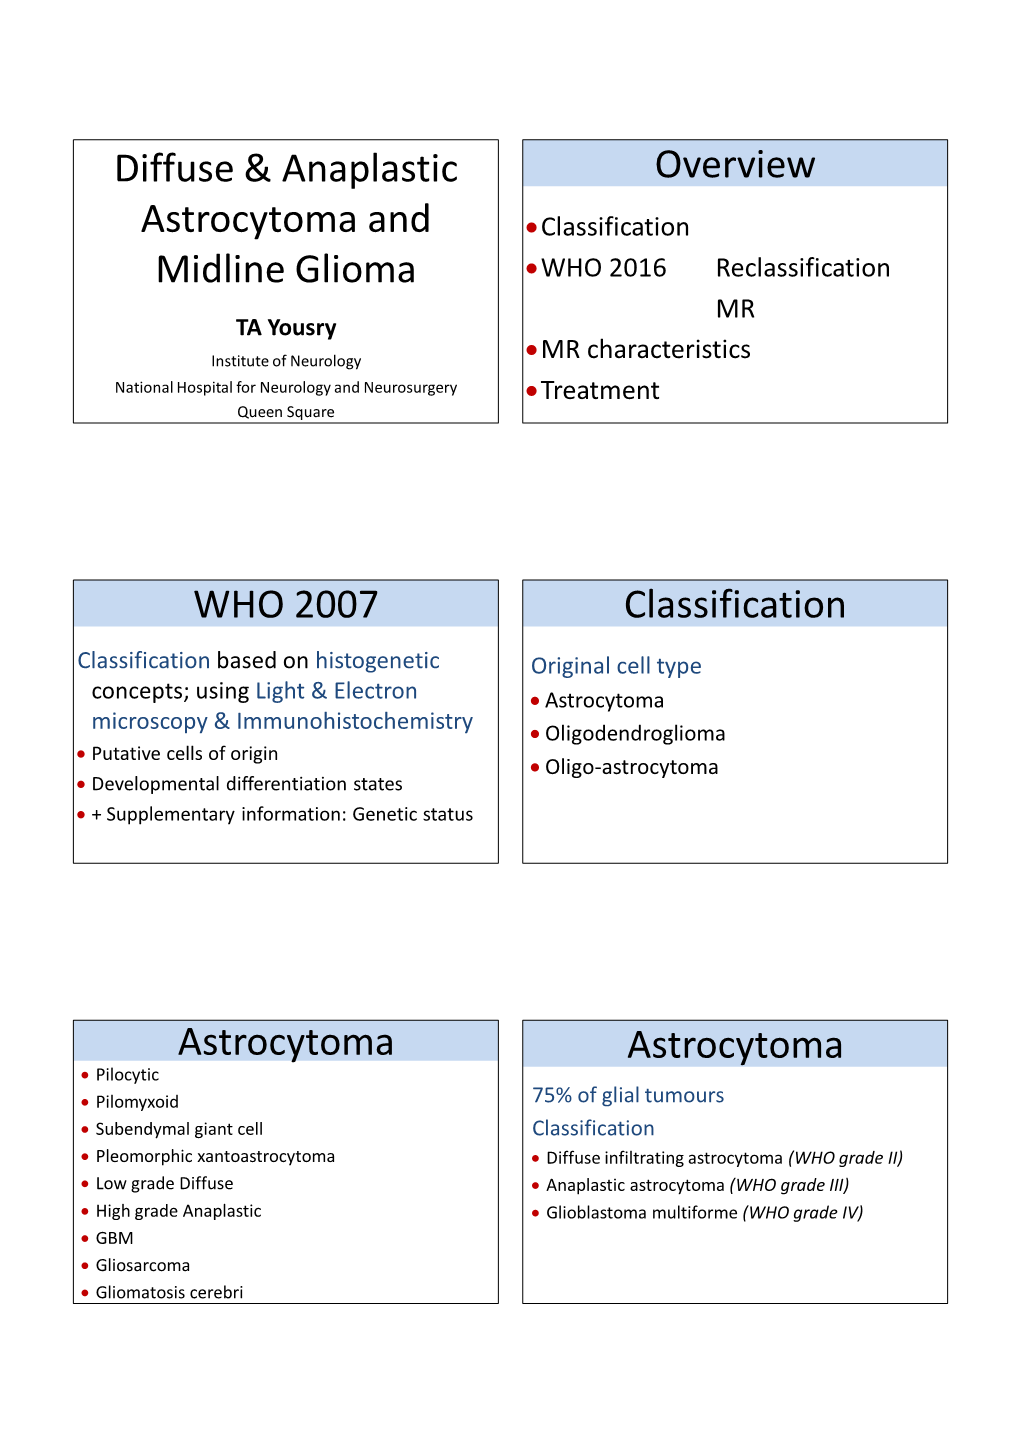 Diffuse & Anaplastic Astrocytoma and Midline Glioma